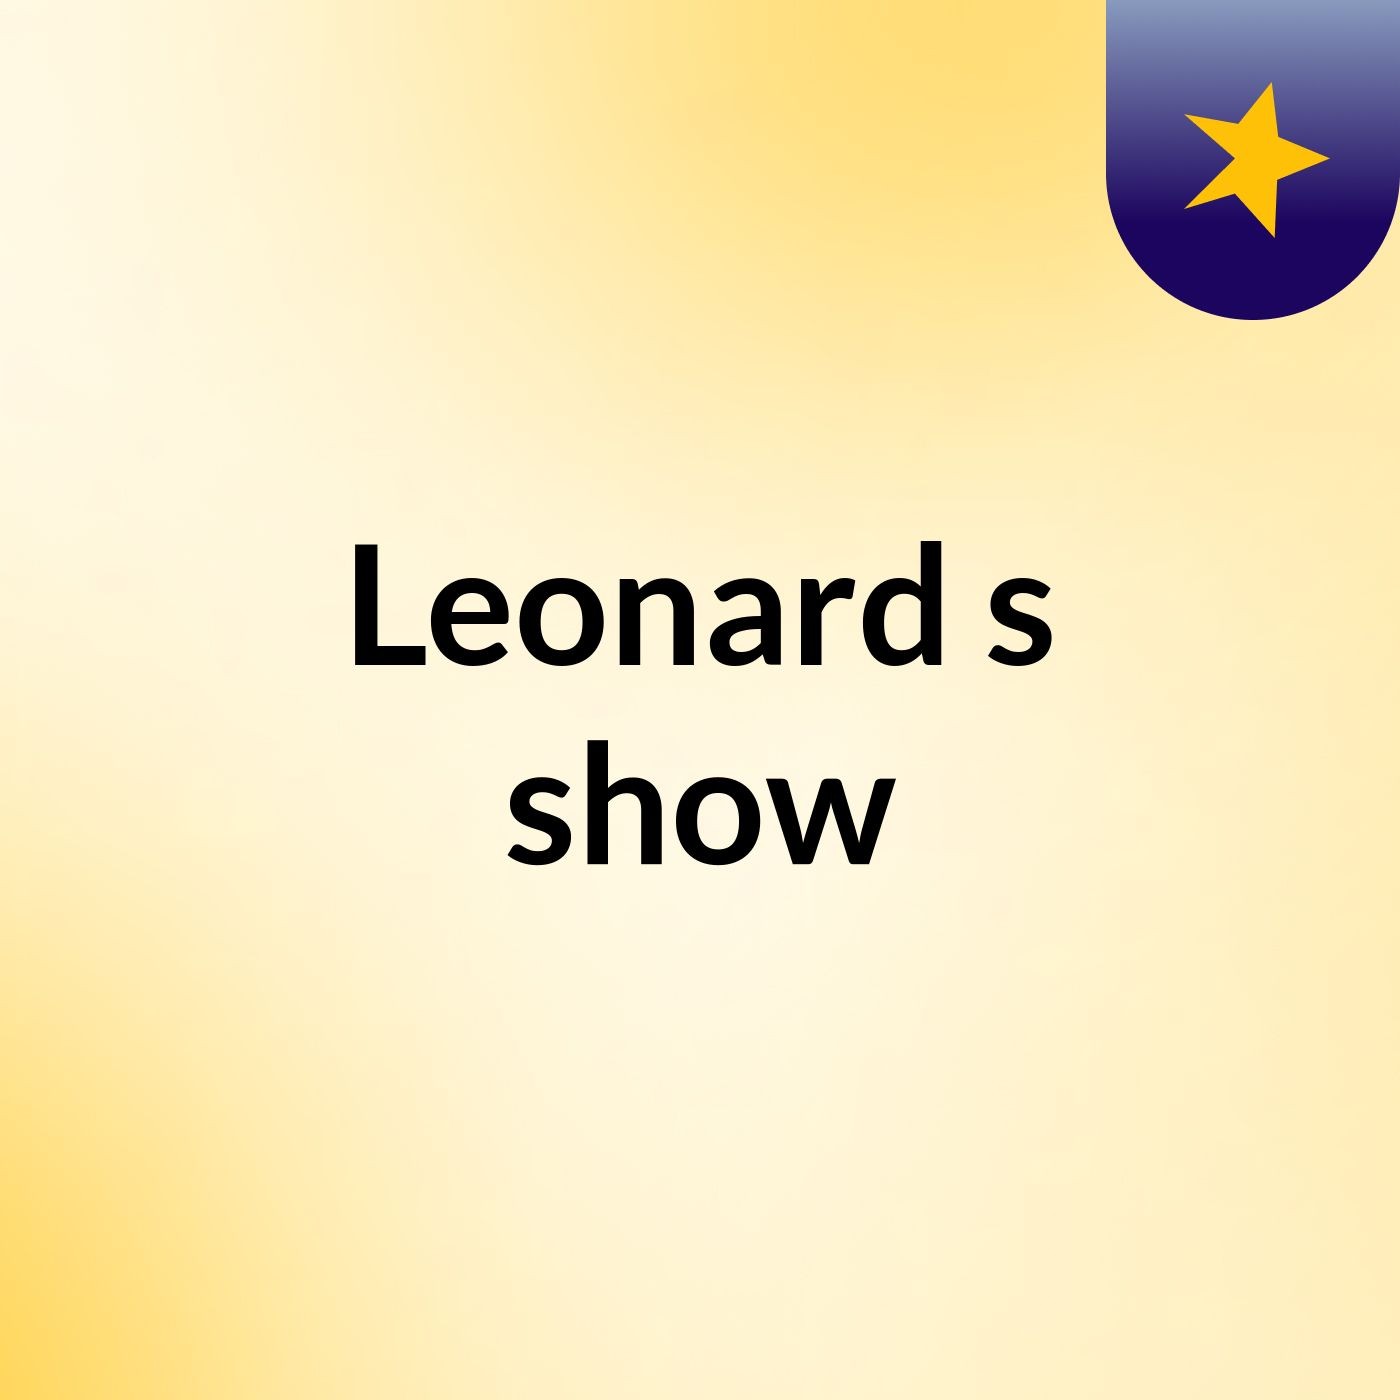 Leonard's show